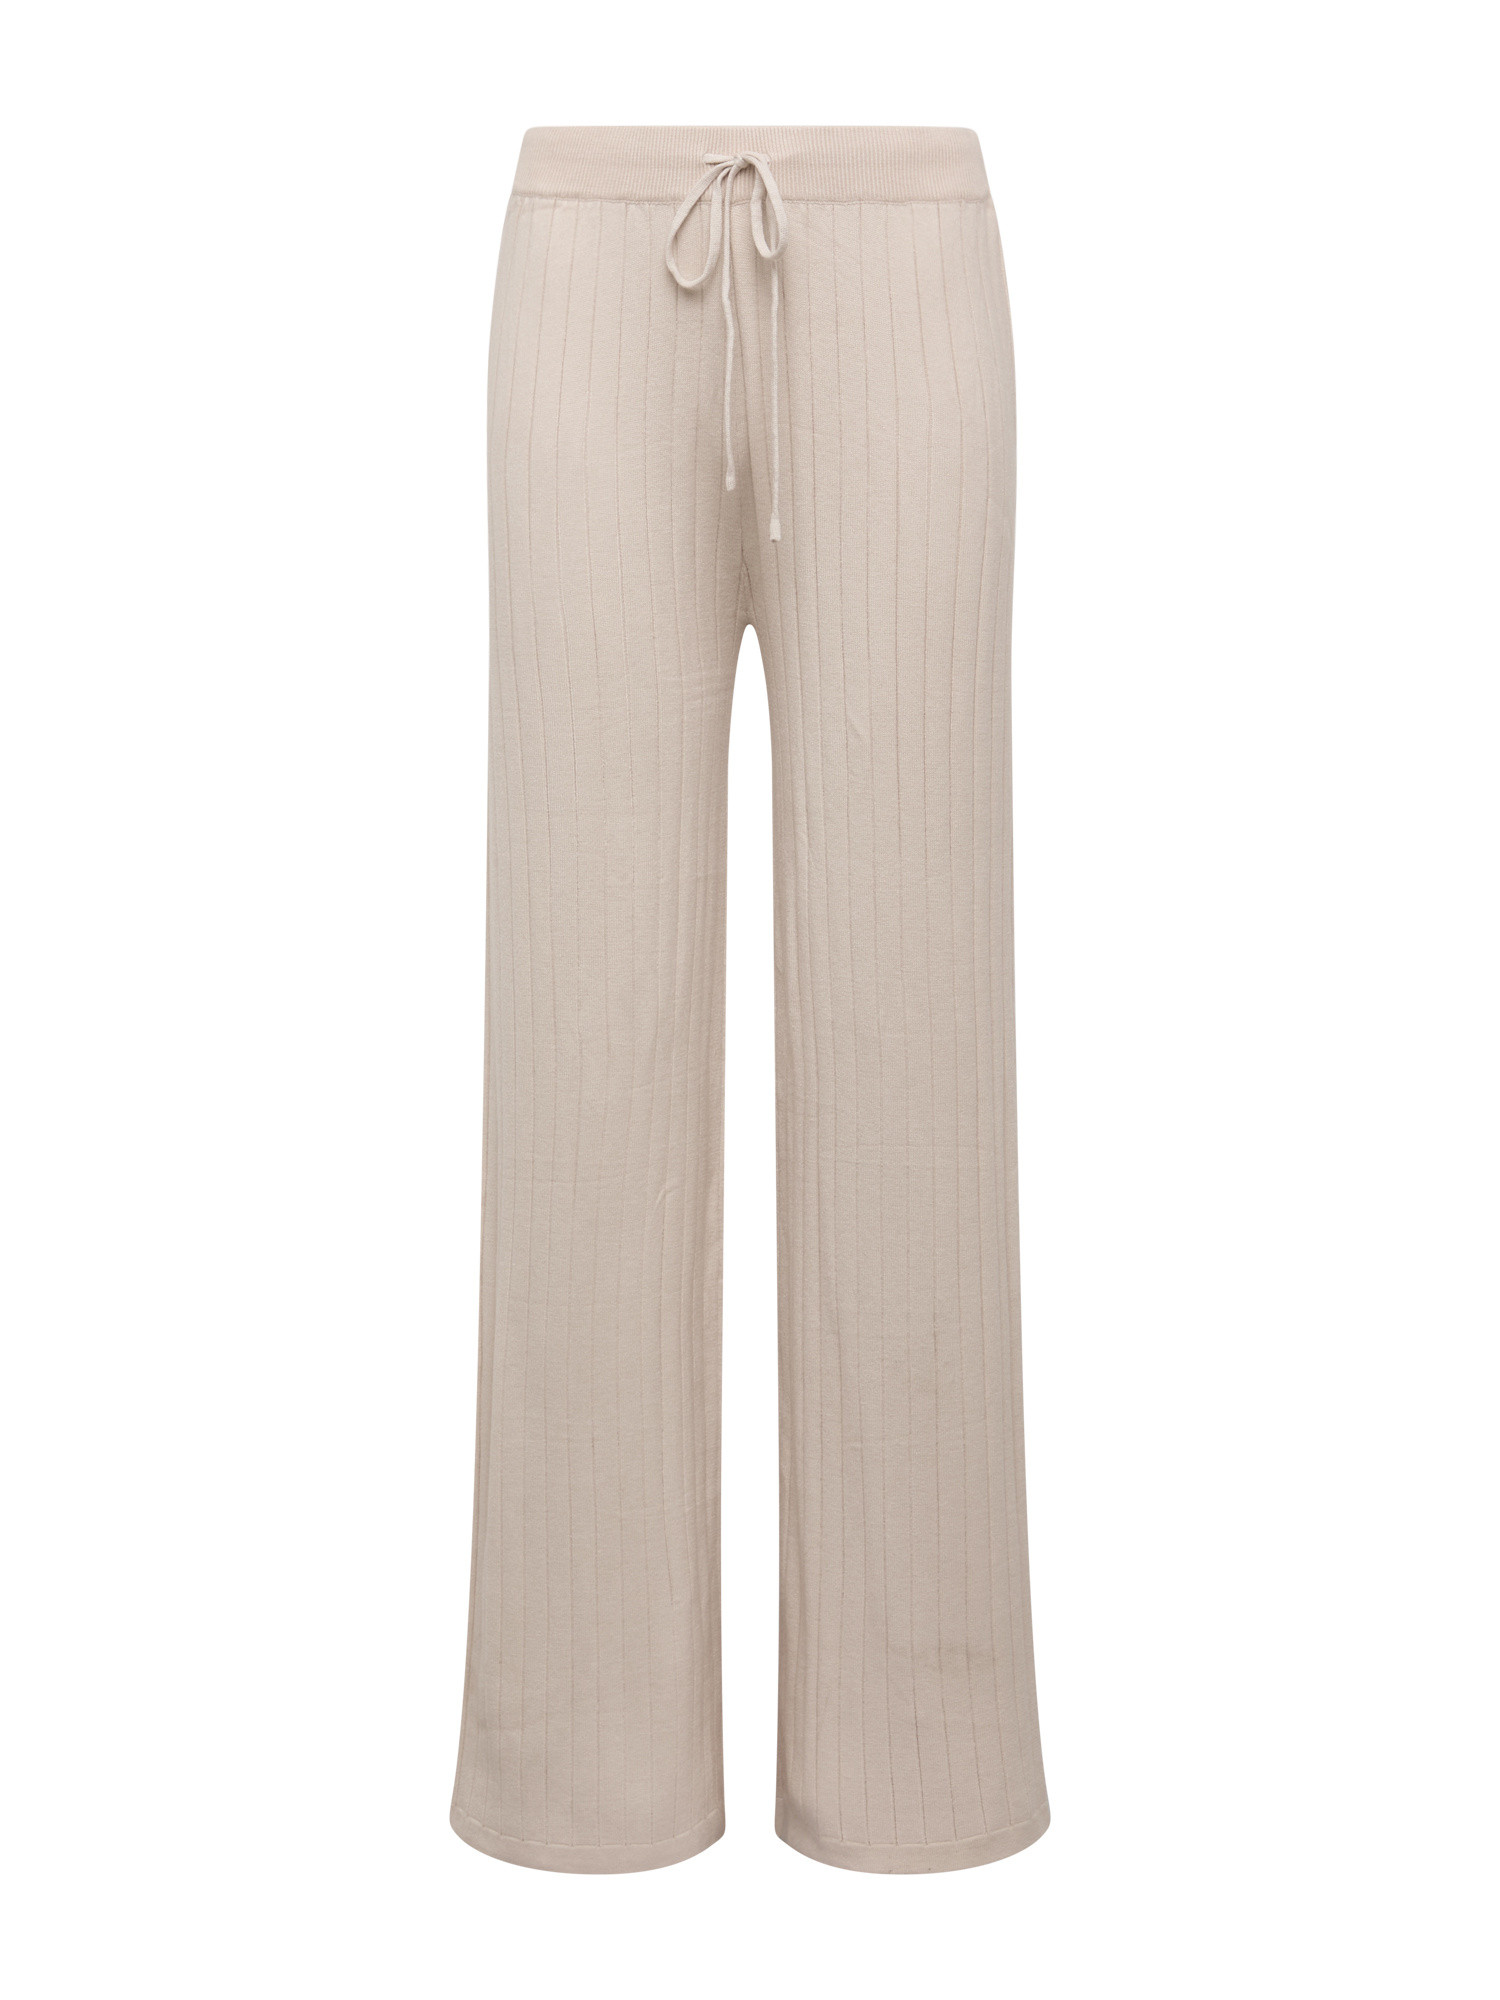 Koan - Pantaloni in maglia a costine, Beige, large image number 0